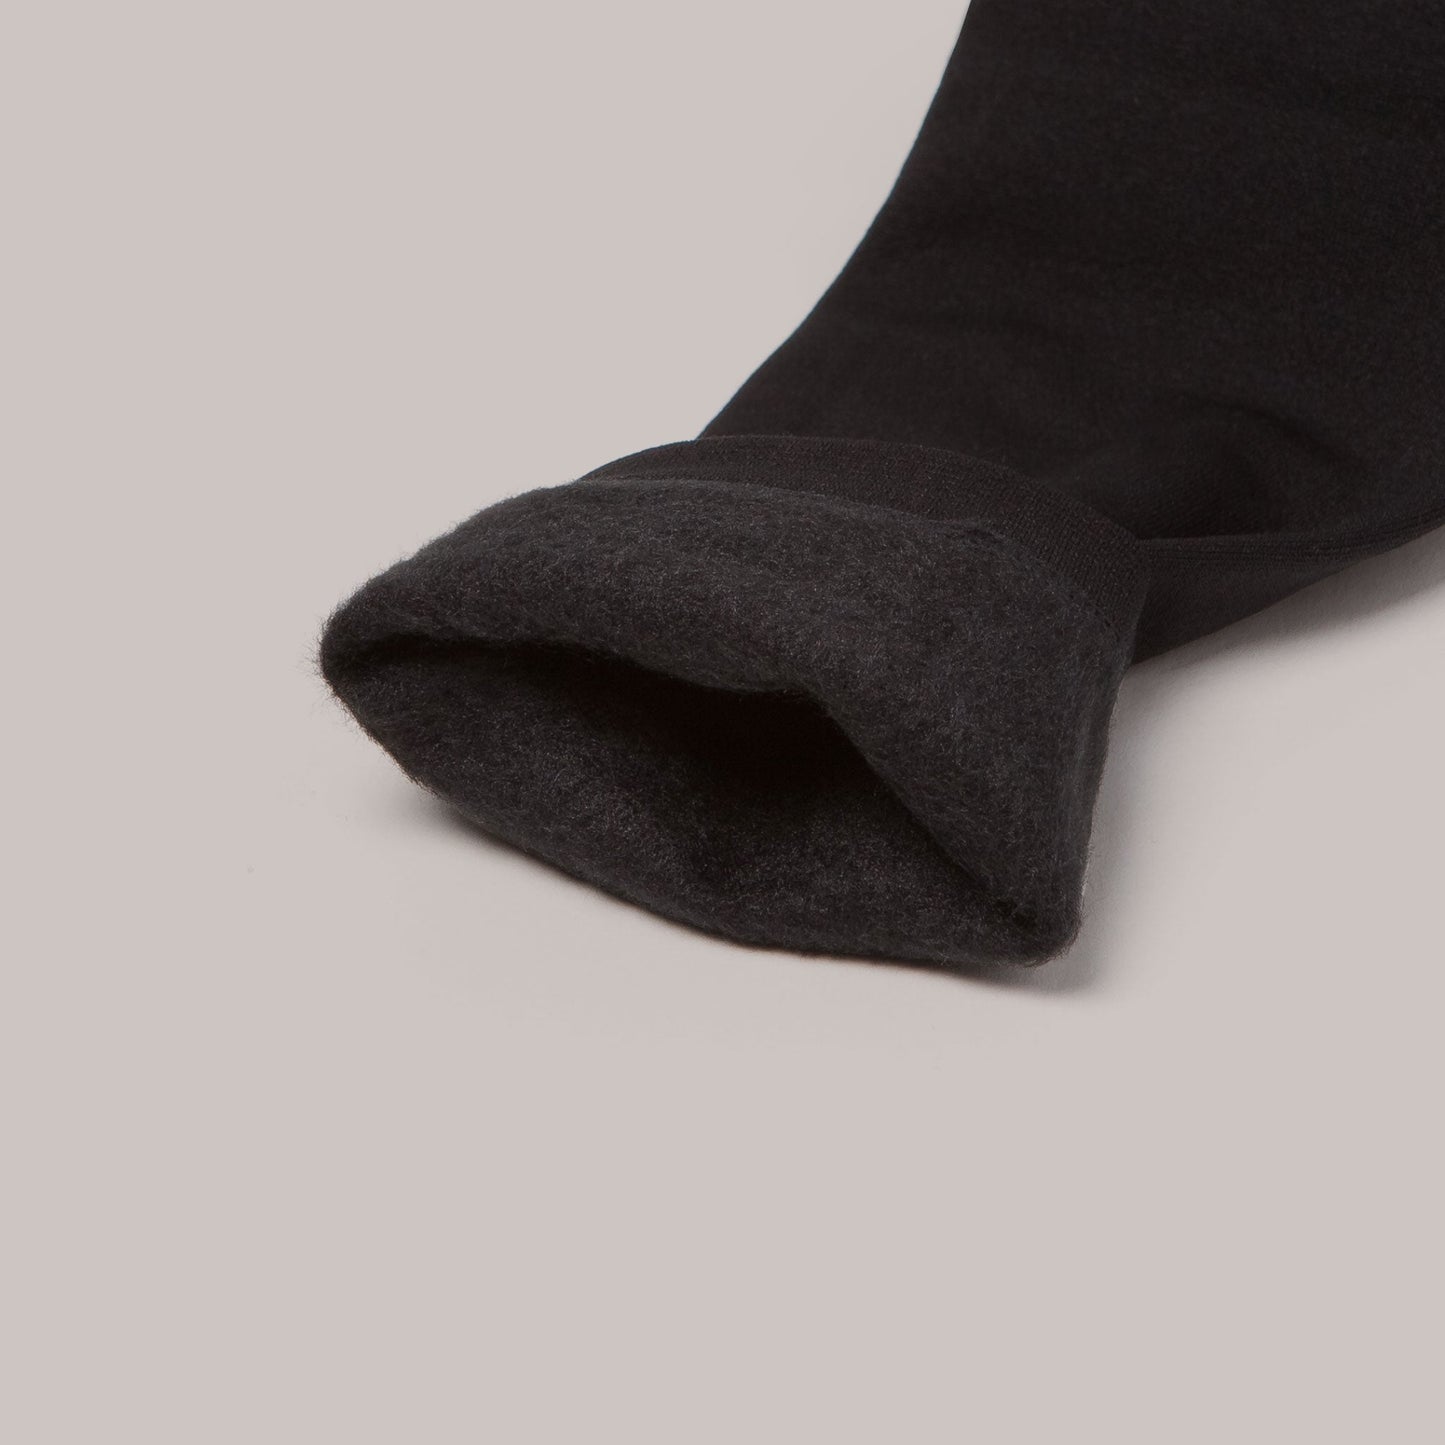 Fleece-lined Leggings (Black) fleece detail